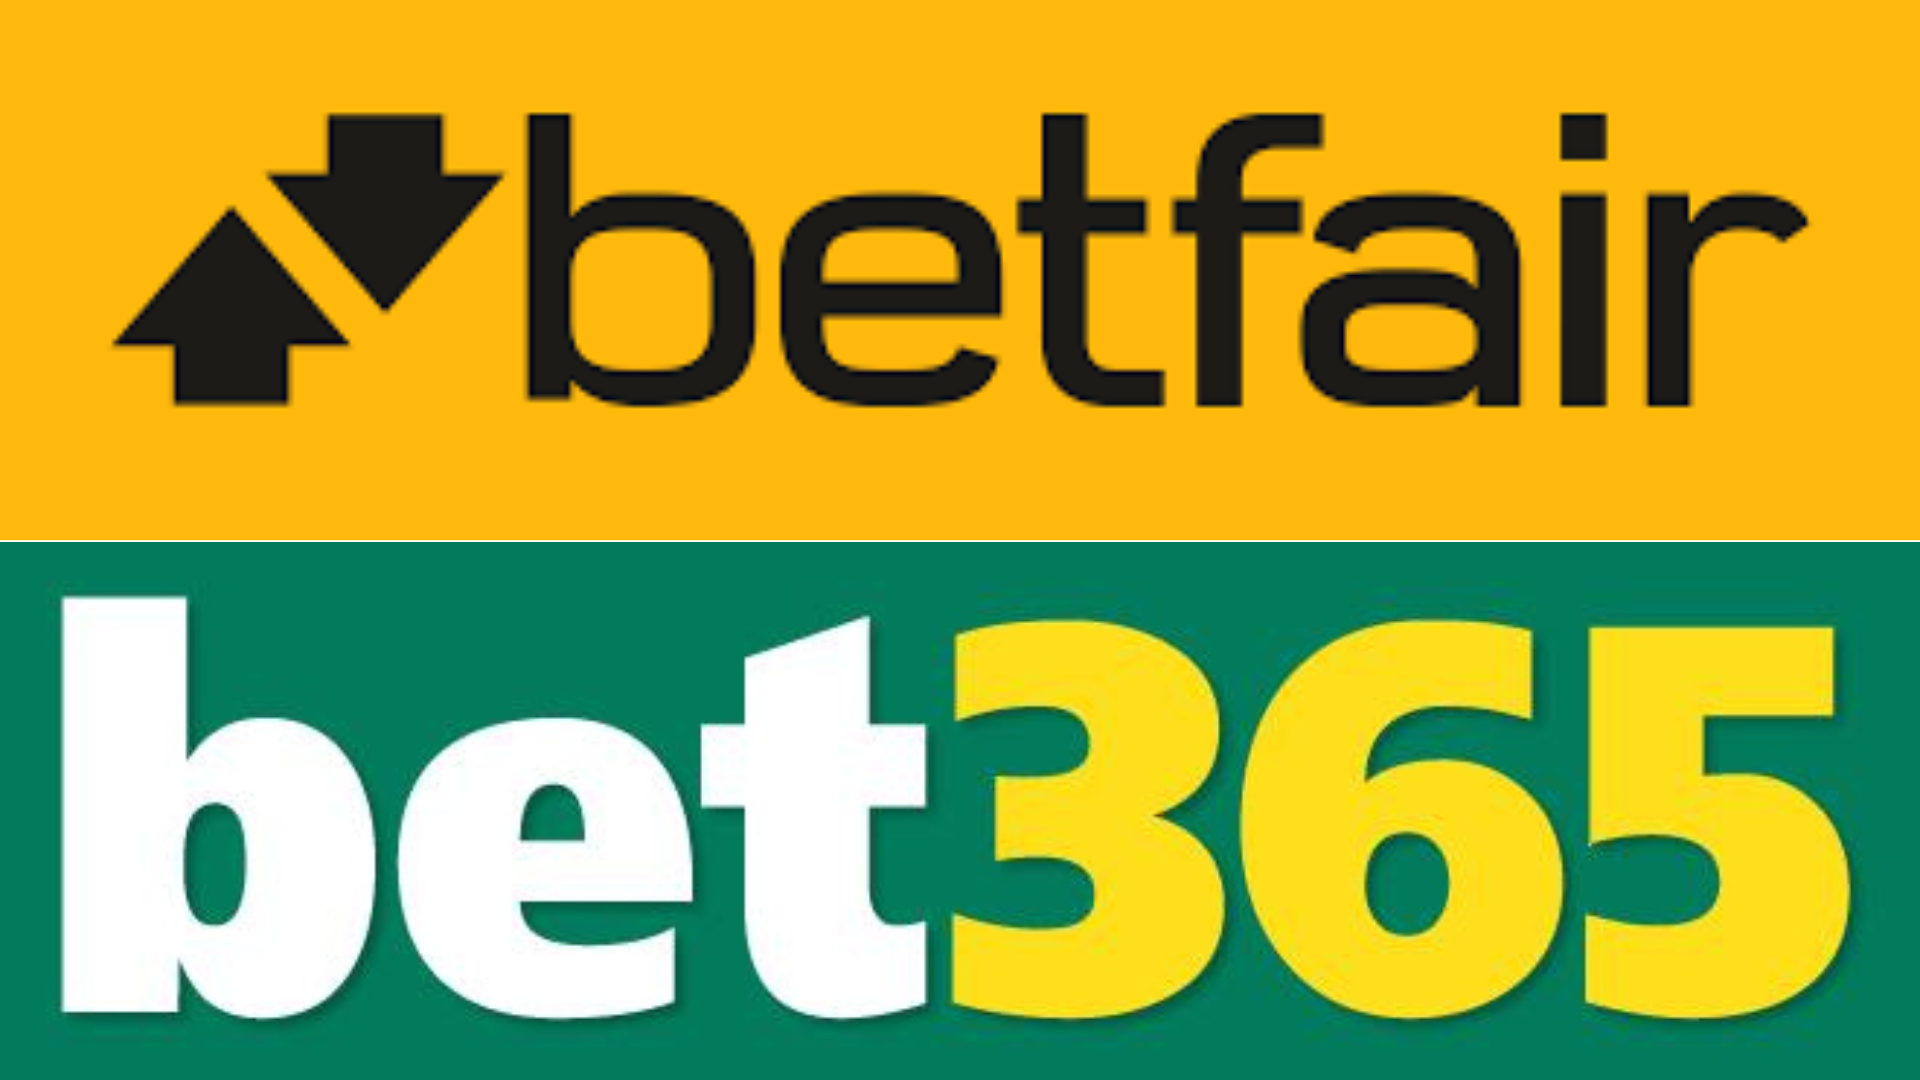 Apostas Esportivas Bet365 Brasil - Jogue na Bet 365 Agora